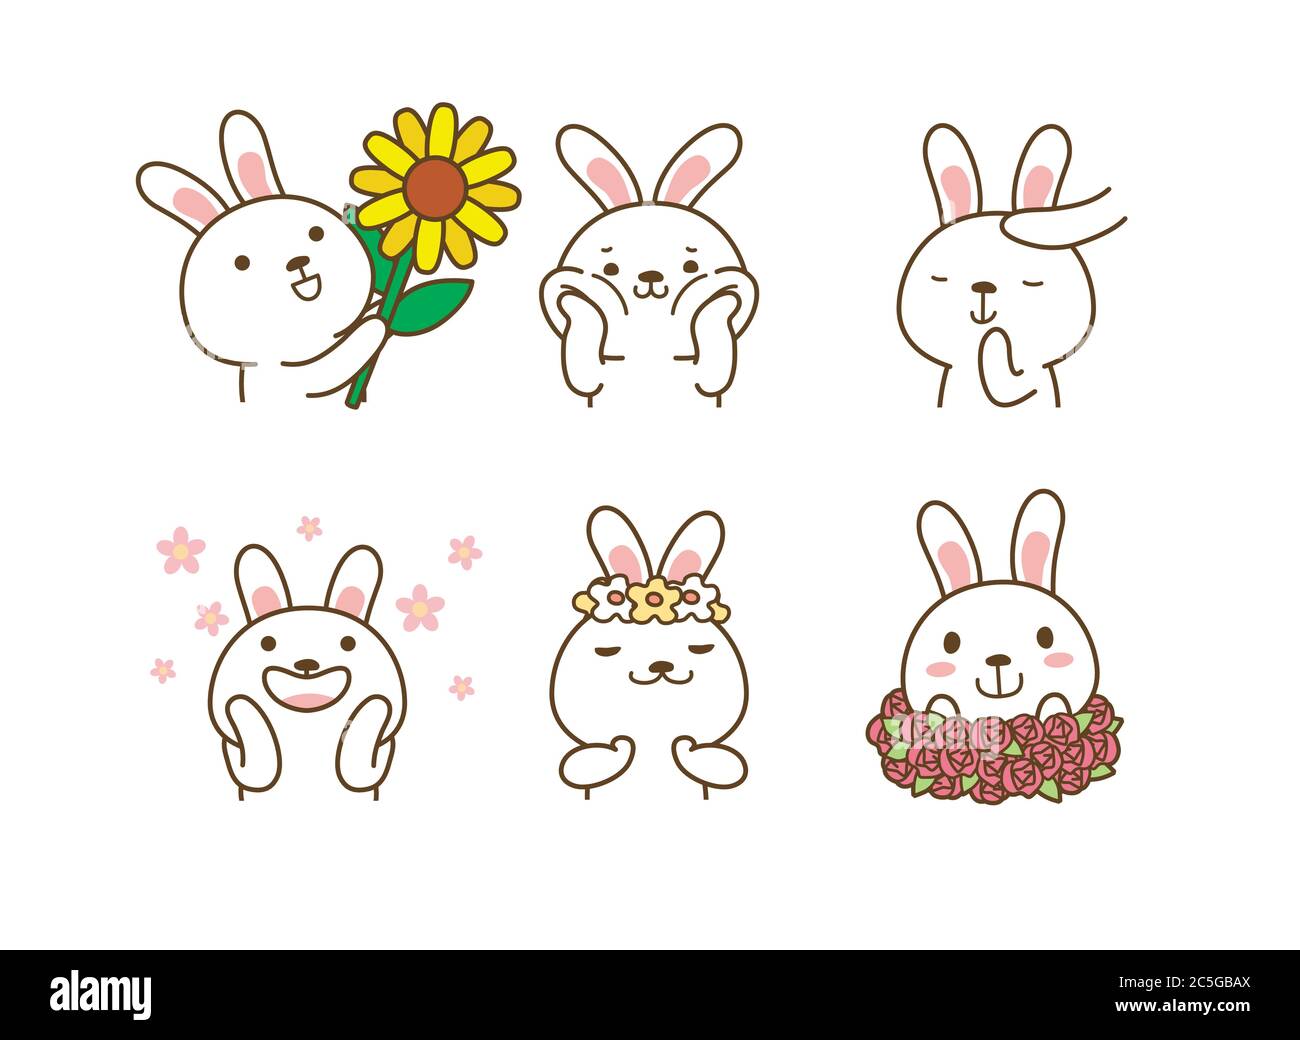 Set of Emoticons. Emoji character cartoon animals illustration 013 Stock Vector